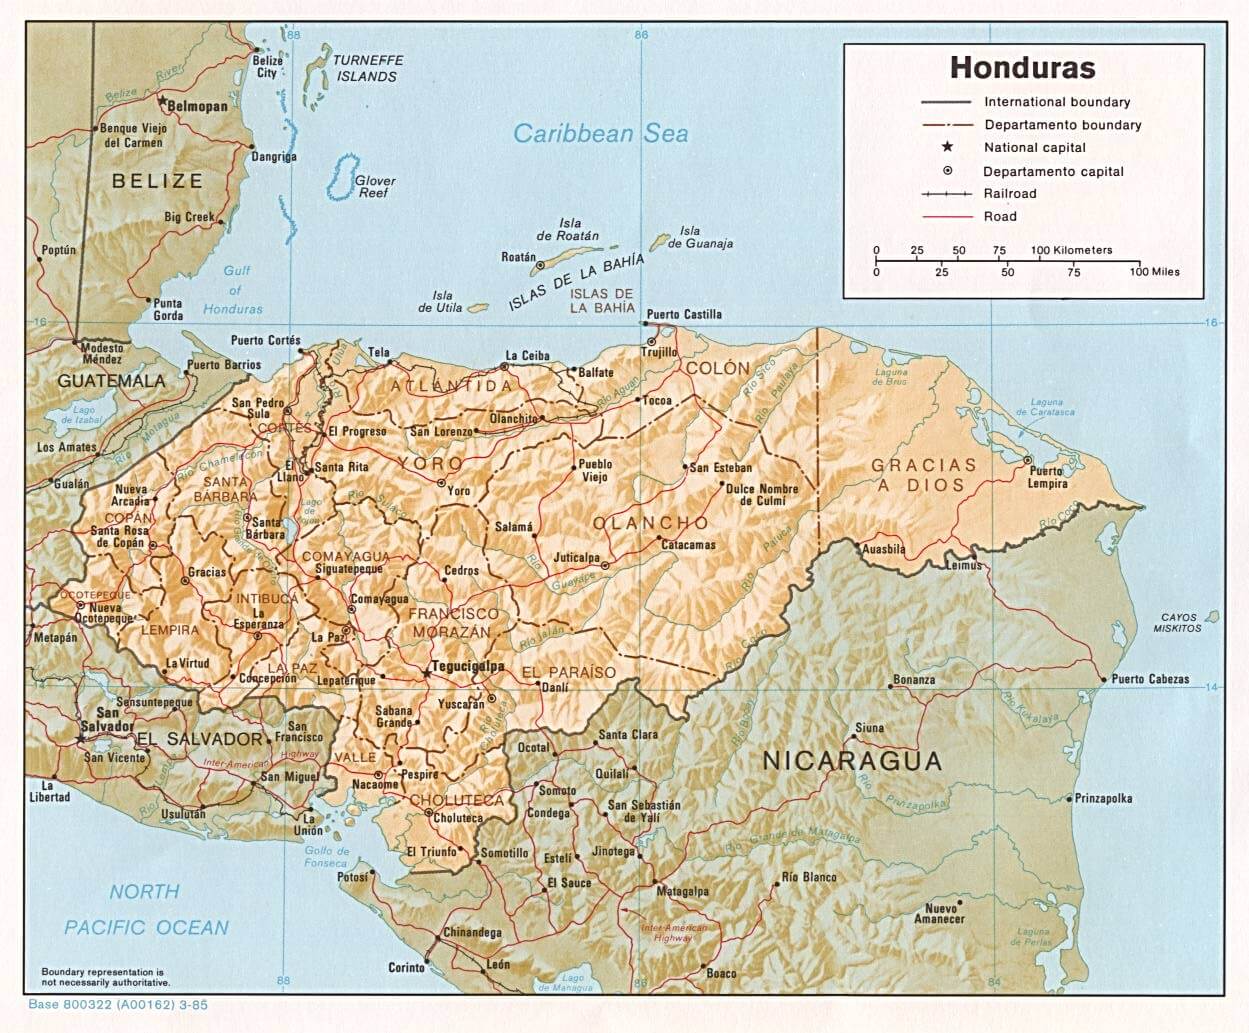 Honduras Shaded Relief Map 1985